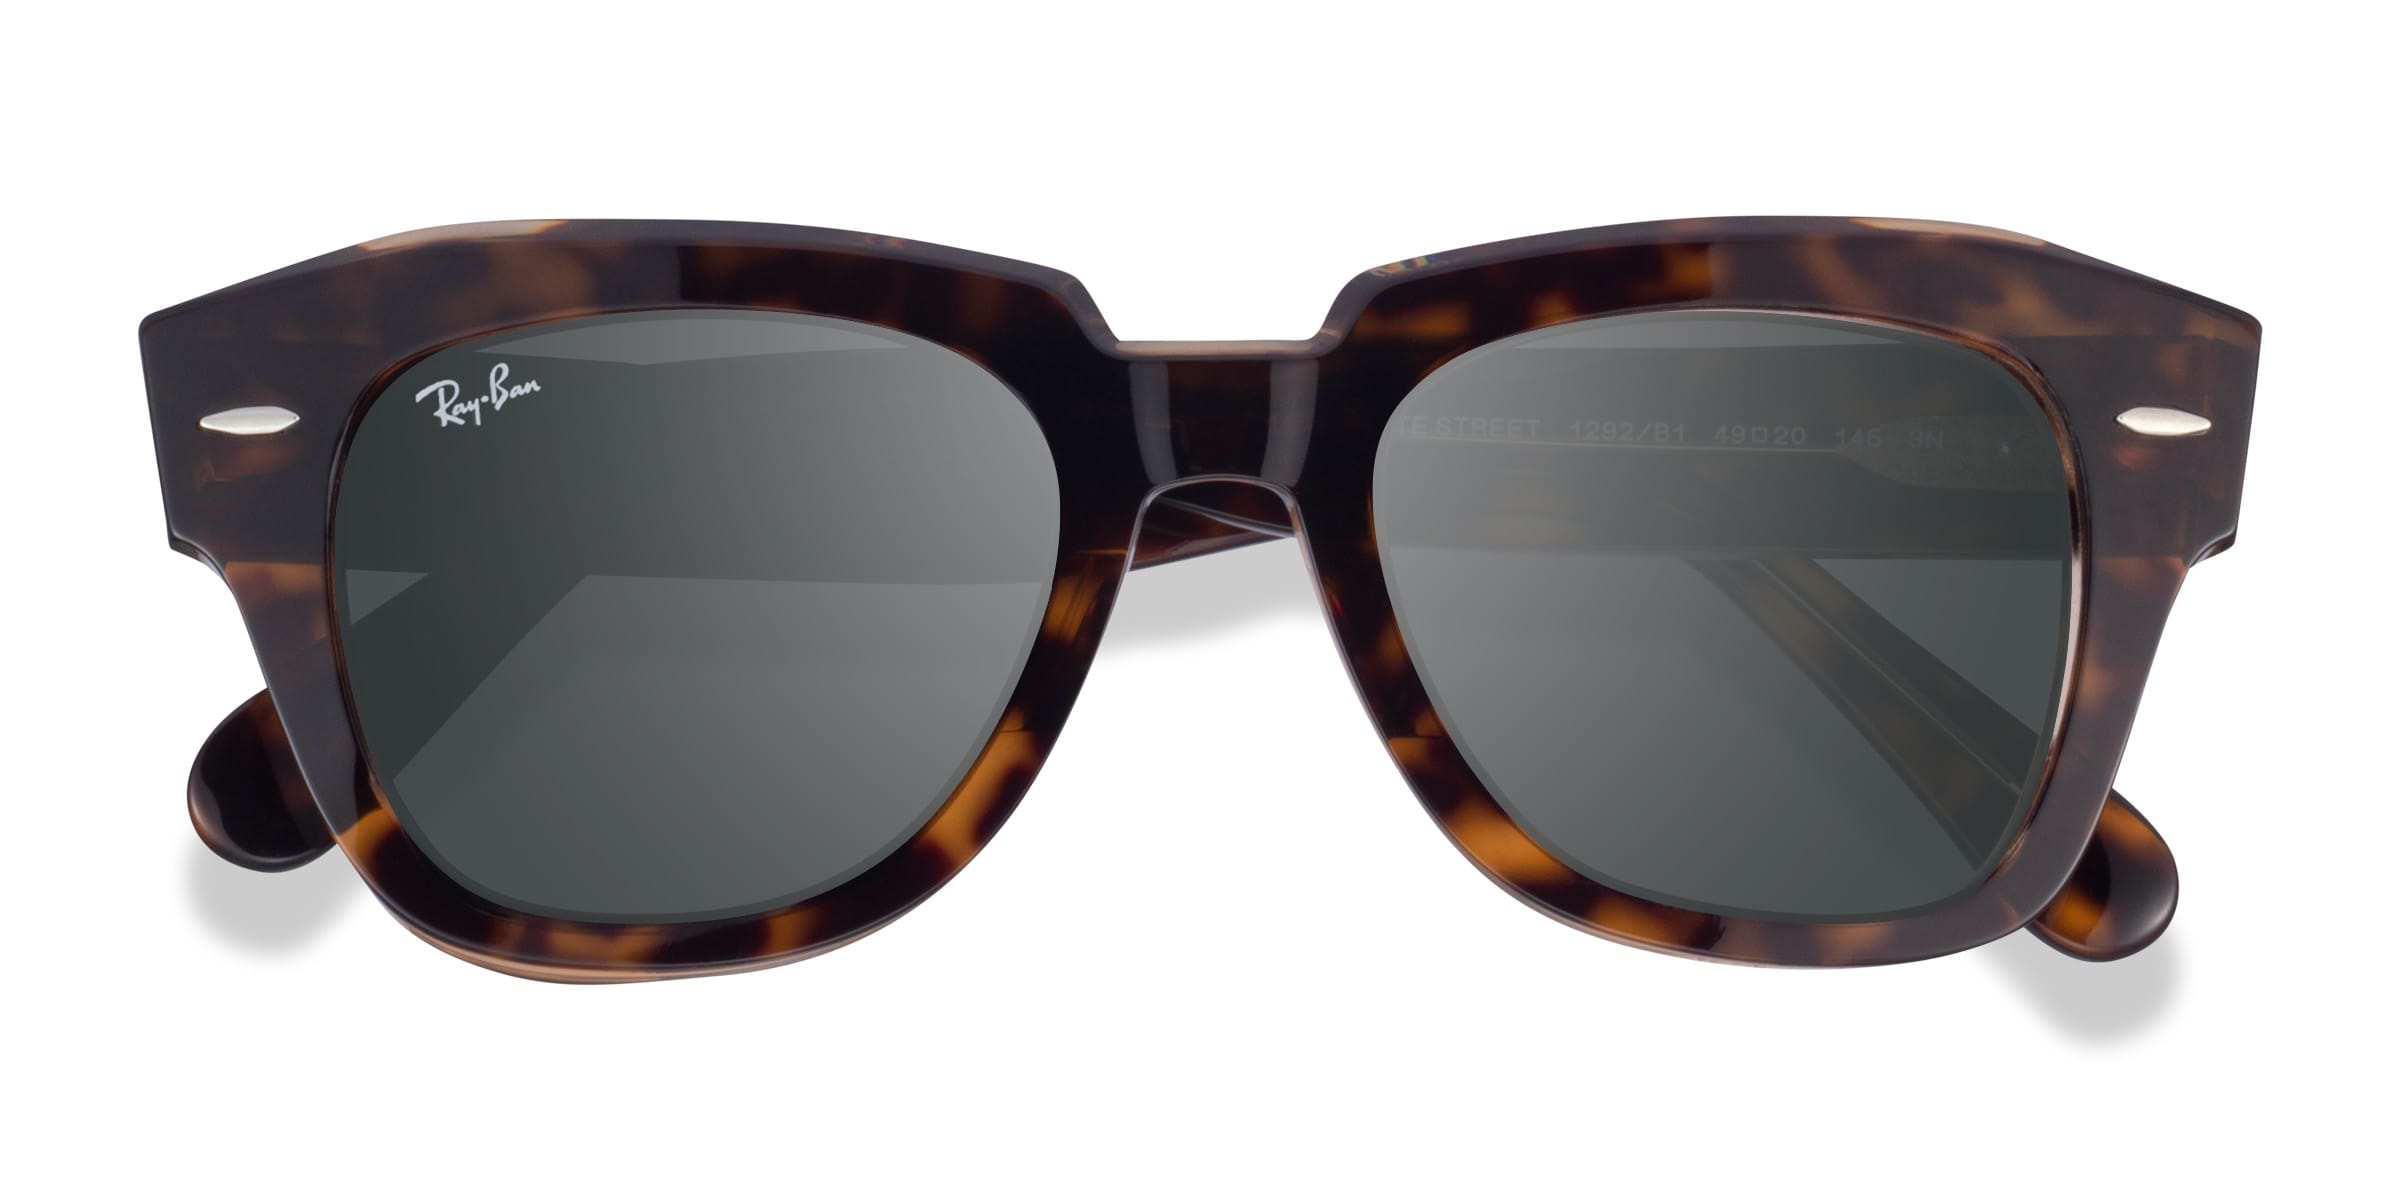 Buy Ray-Ban Ray-Ban Sunglasses | Havana Sunglasses ( 0Rb4378 | Square |  Havana Frame | Blue Lens ) Sunglasses Online.